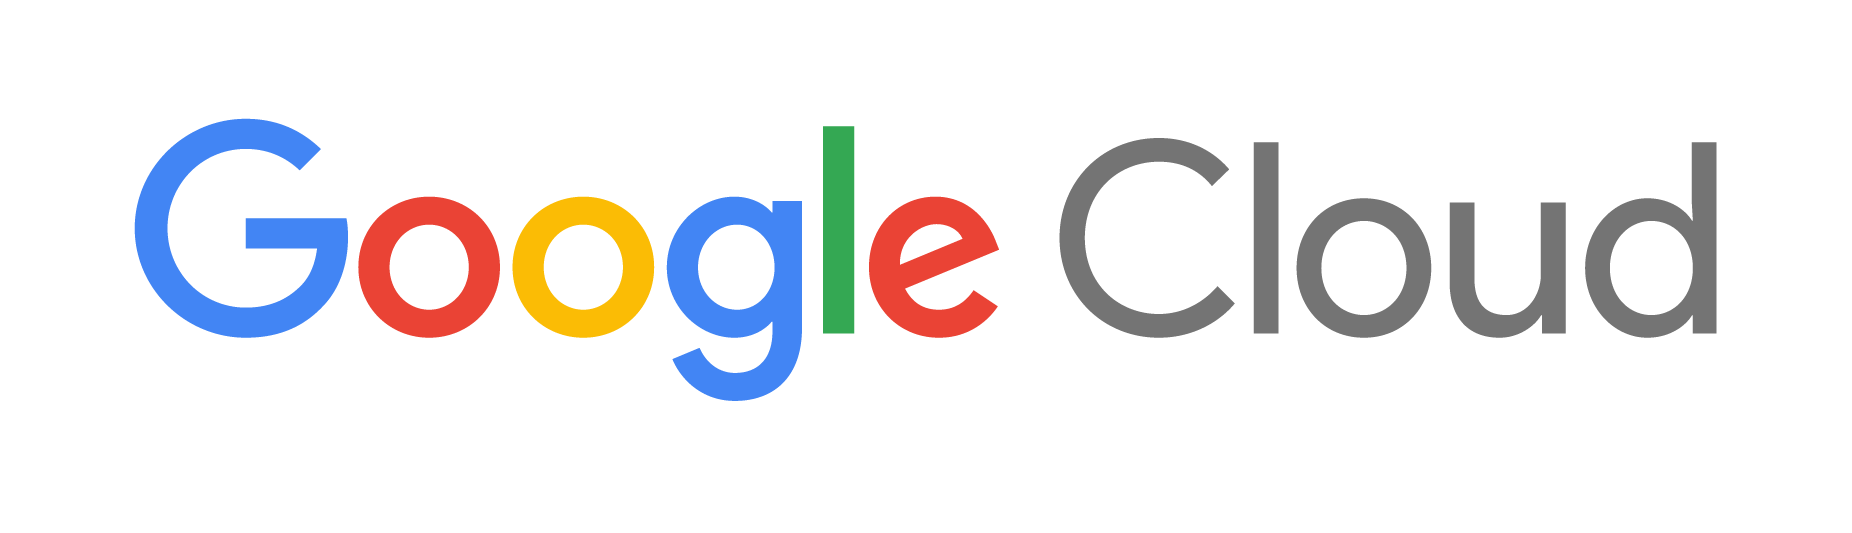 google-cloud-logo-color-png